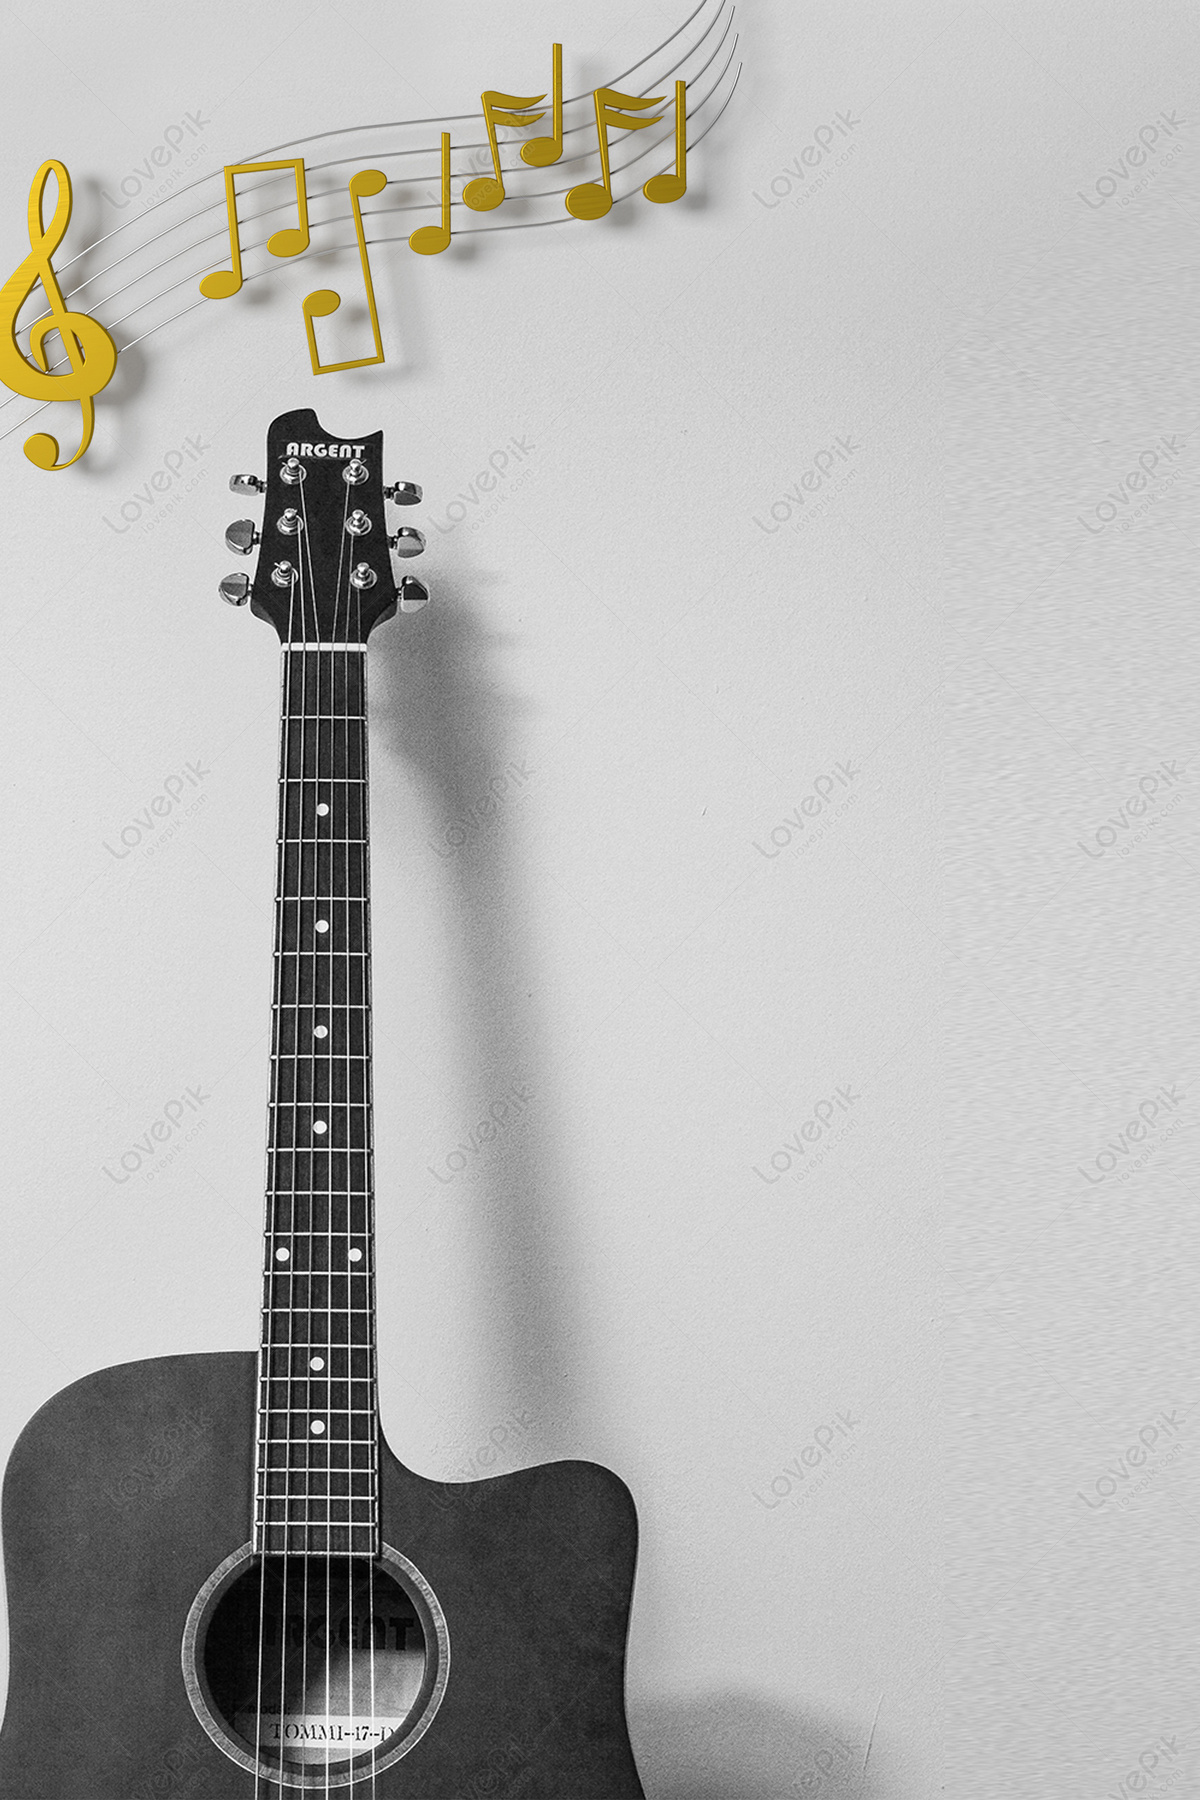 Guitar Background Download Free | Banner Background Image on Lovepik |  401245551